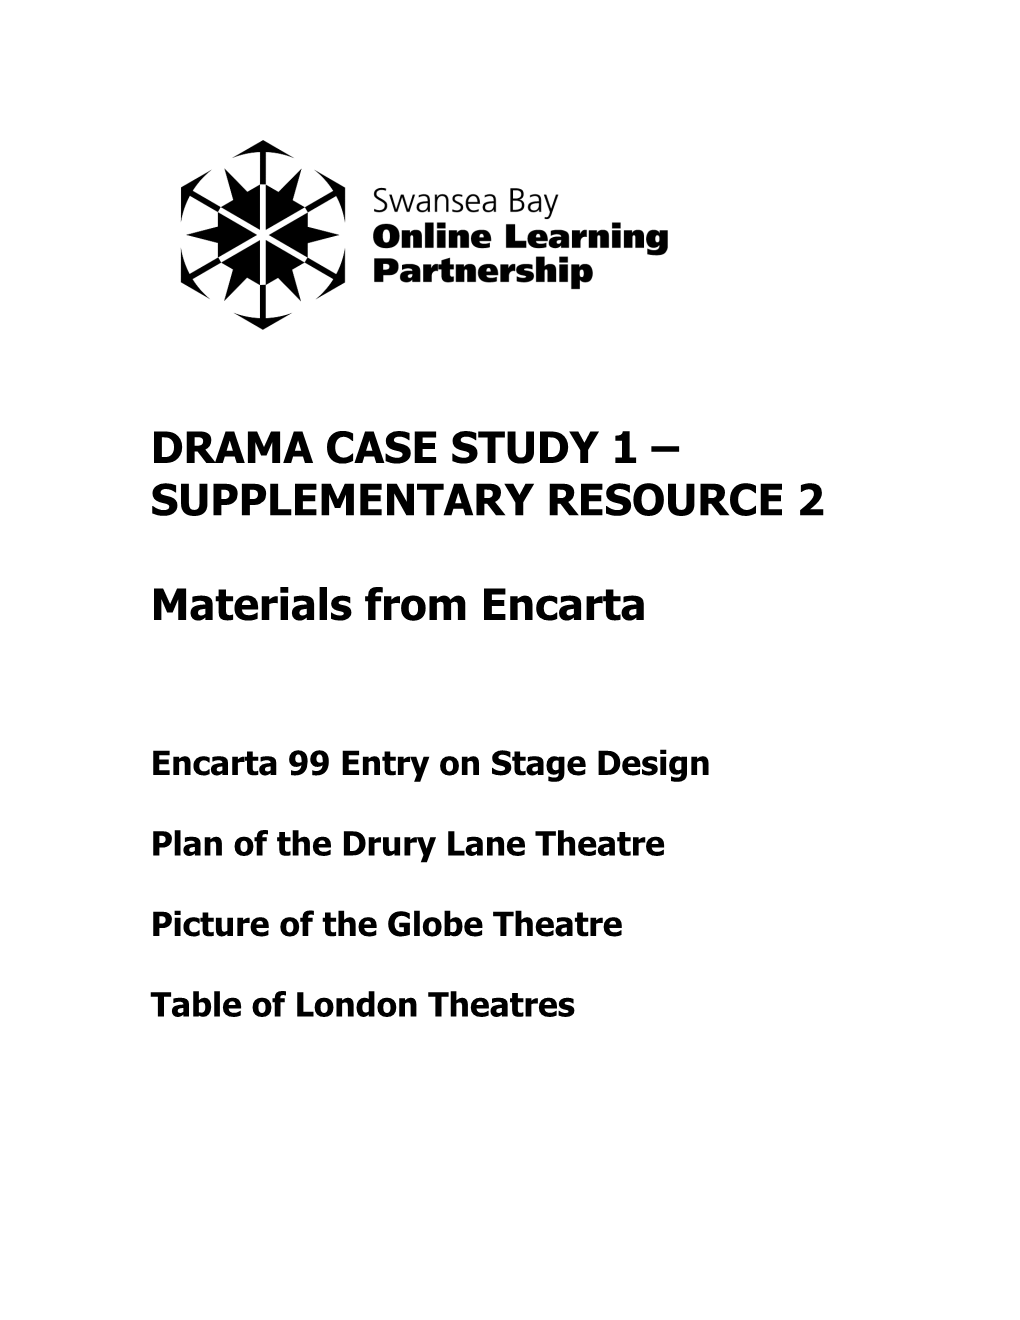 Drama Case Study 1 Supplementary Resource 2